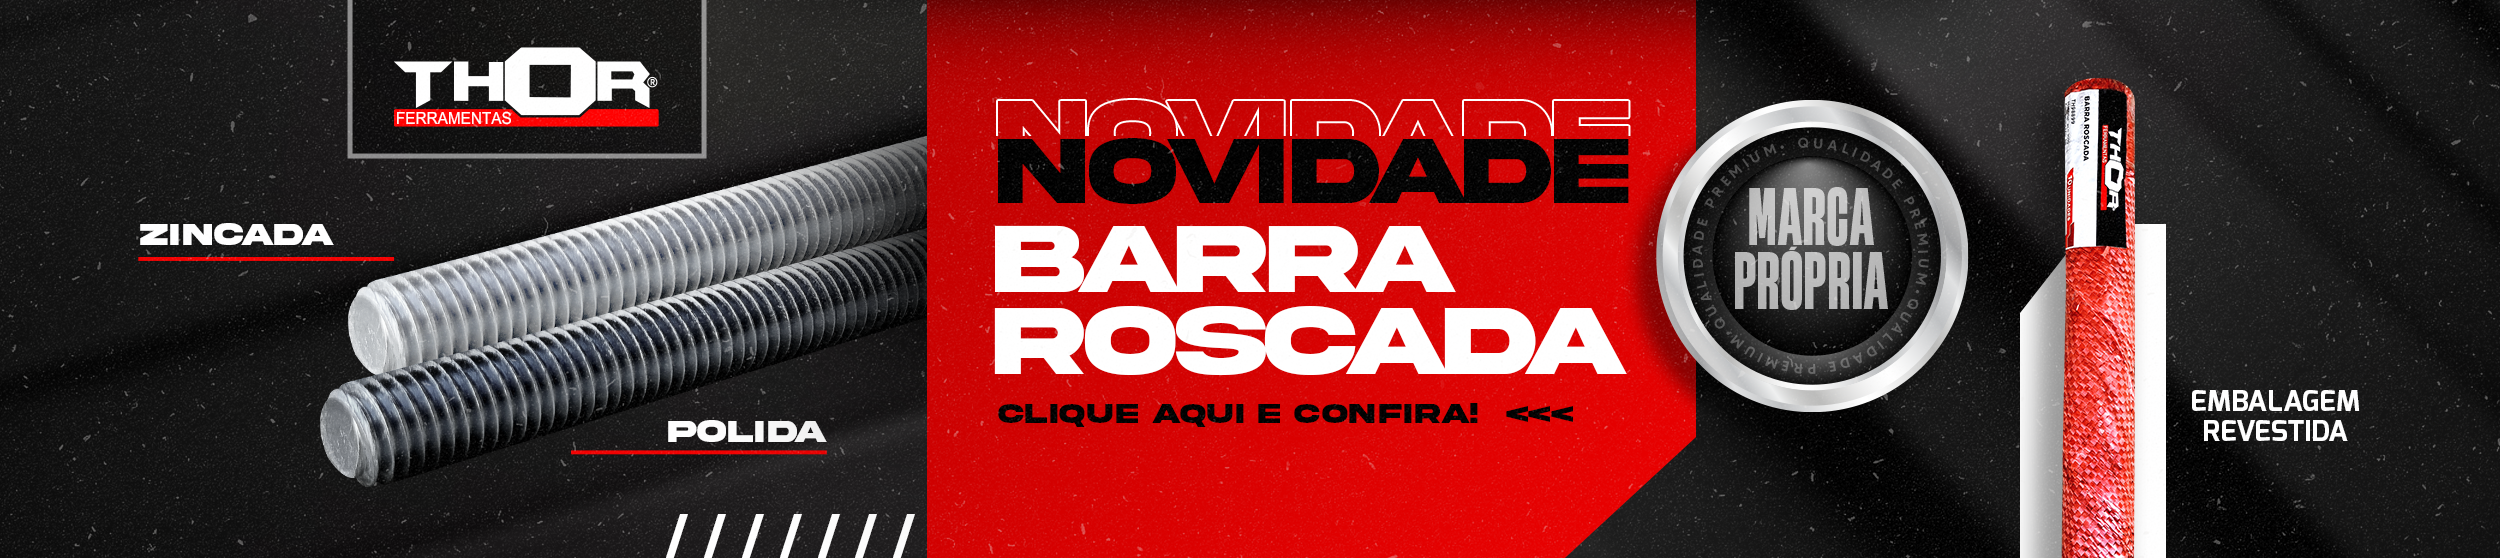 BARRA ROSCADA >>>>  THOR 